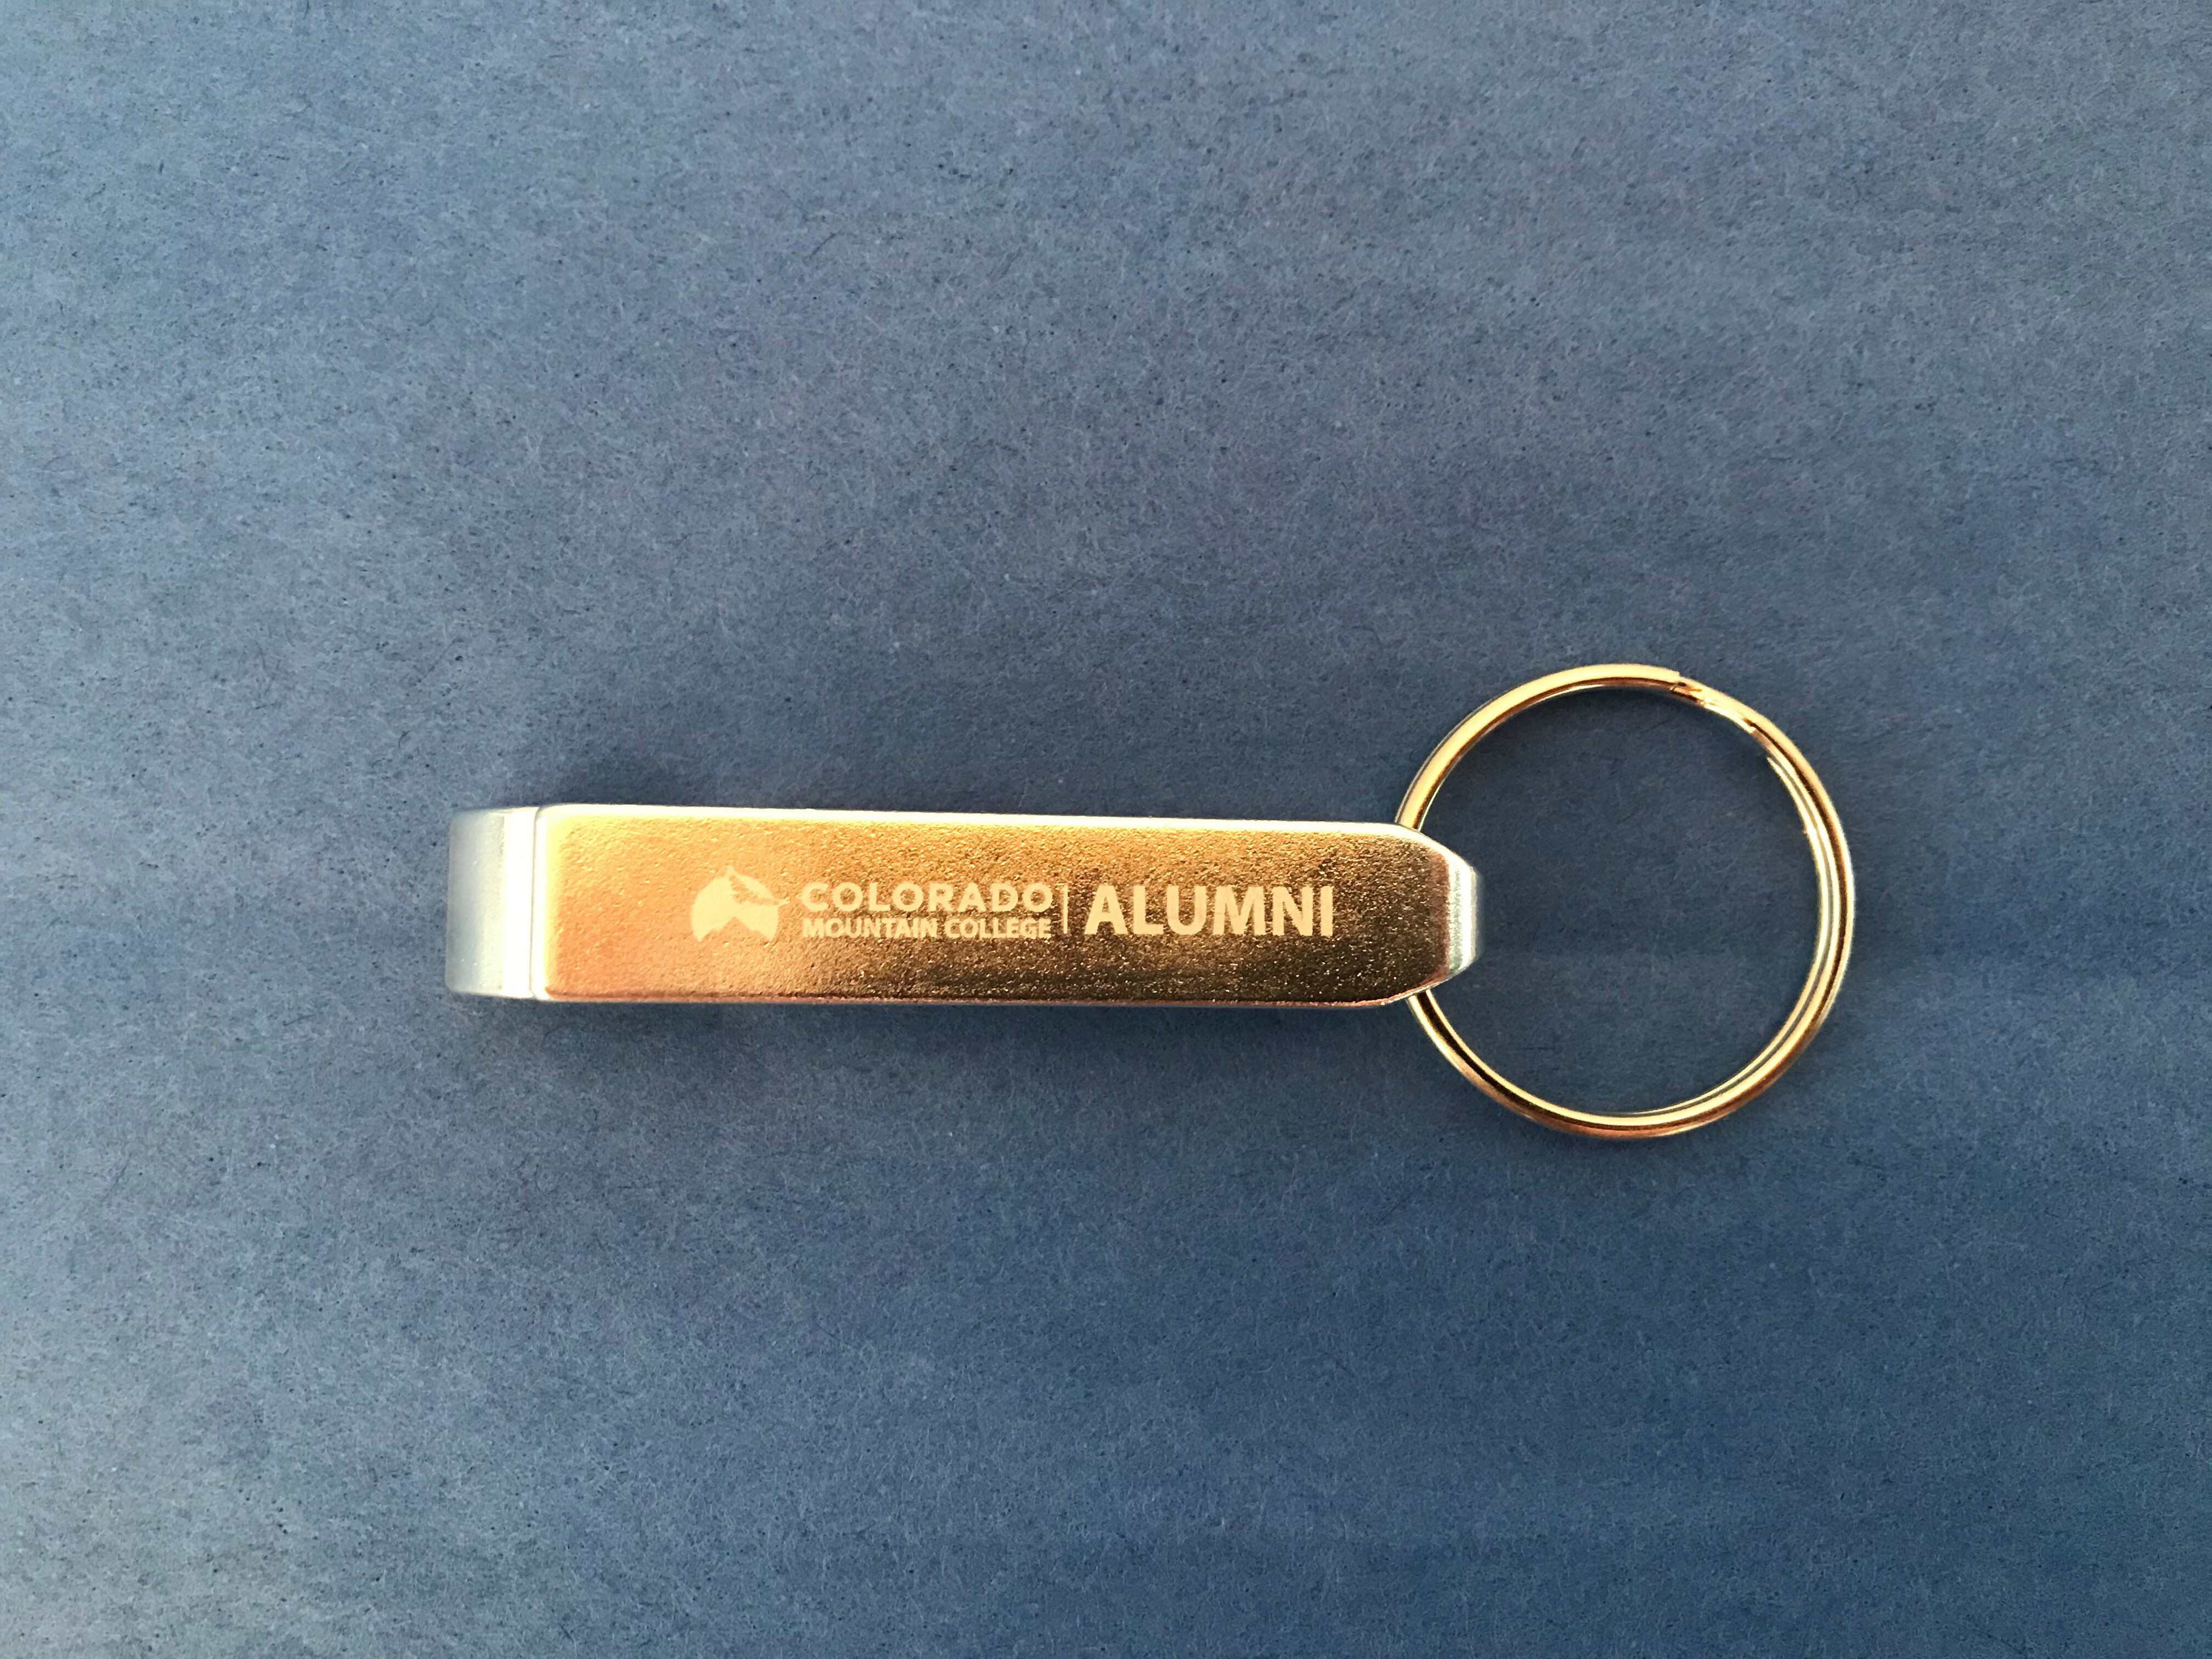 Louisiana Tech Crystal Coat Round Alumni Bottle Opener Keychain